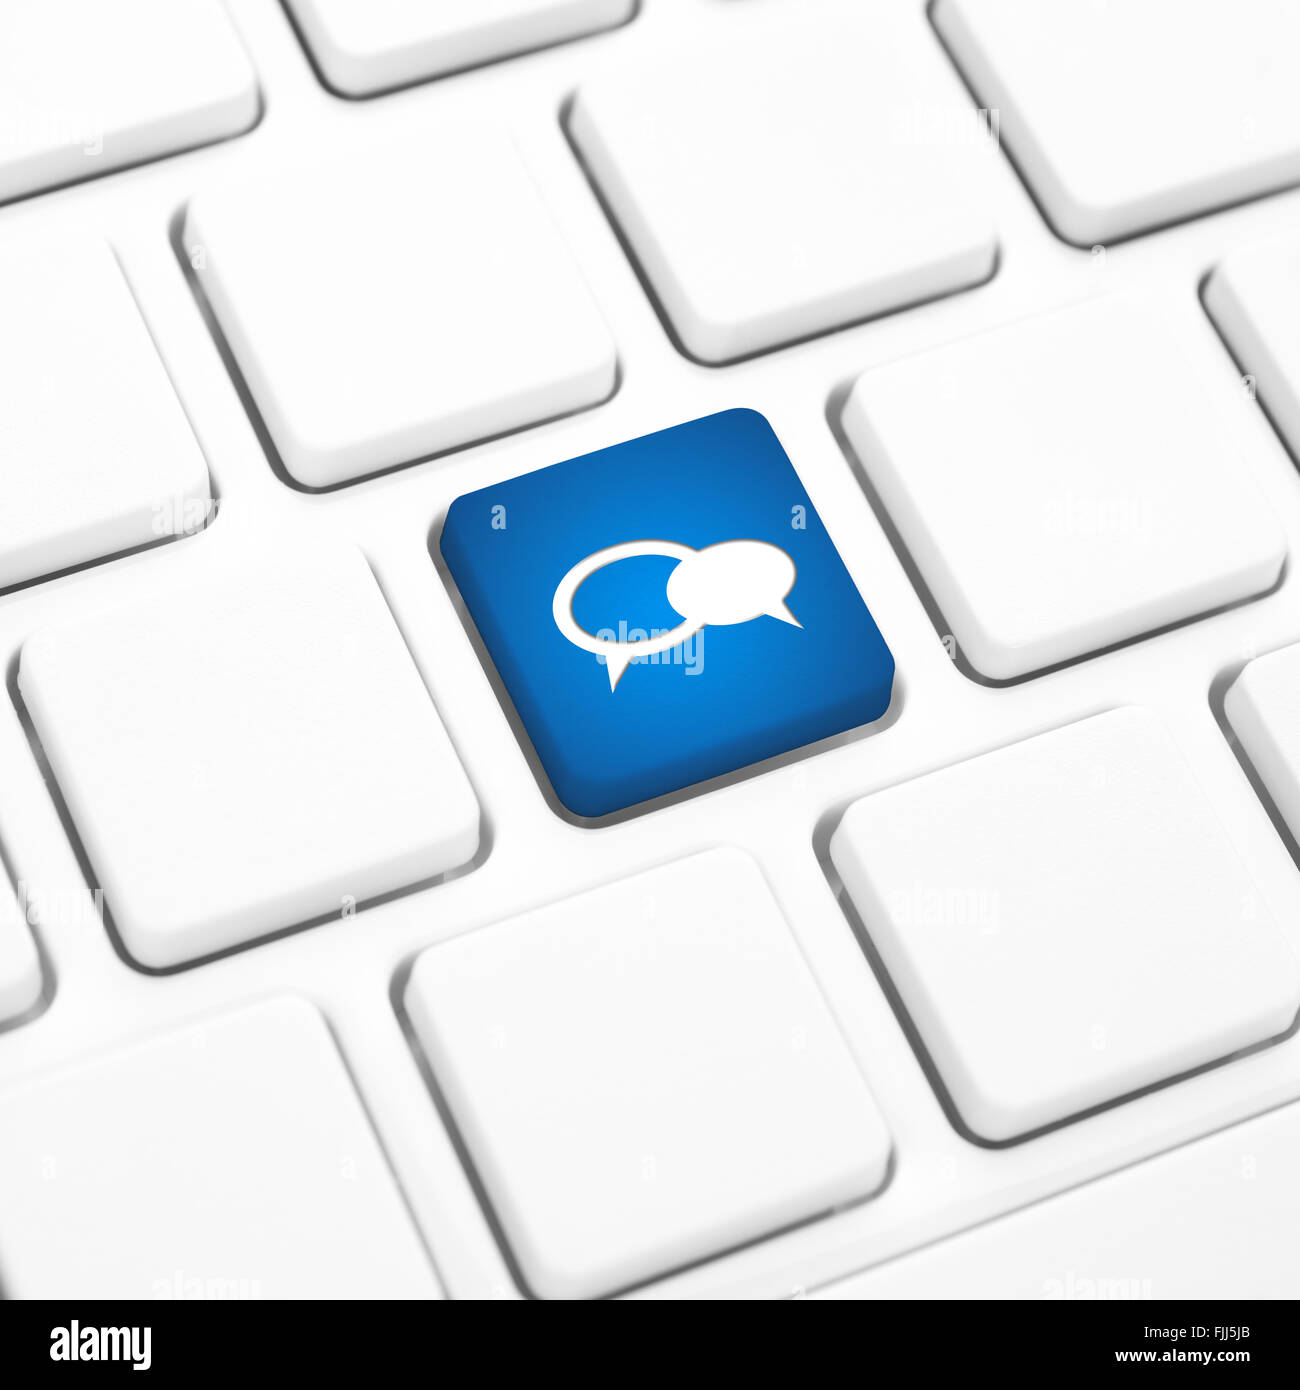 Social business concept, balloon icon, blue button or key on white keyboard. Stock Photo